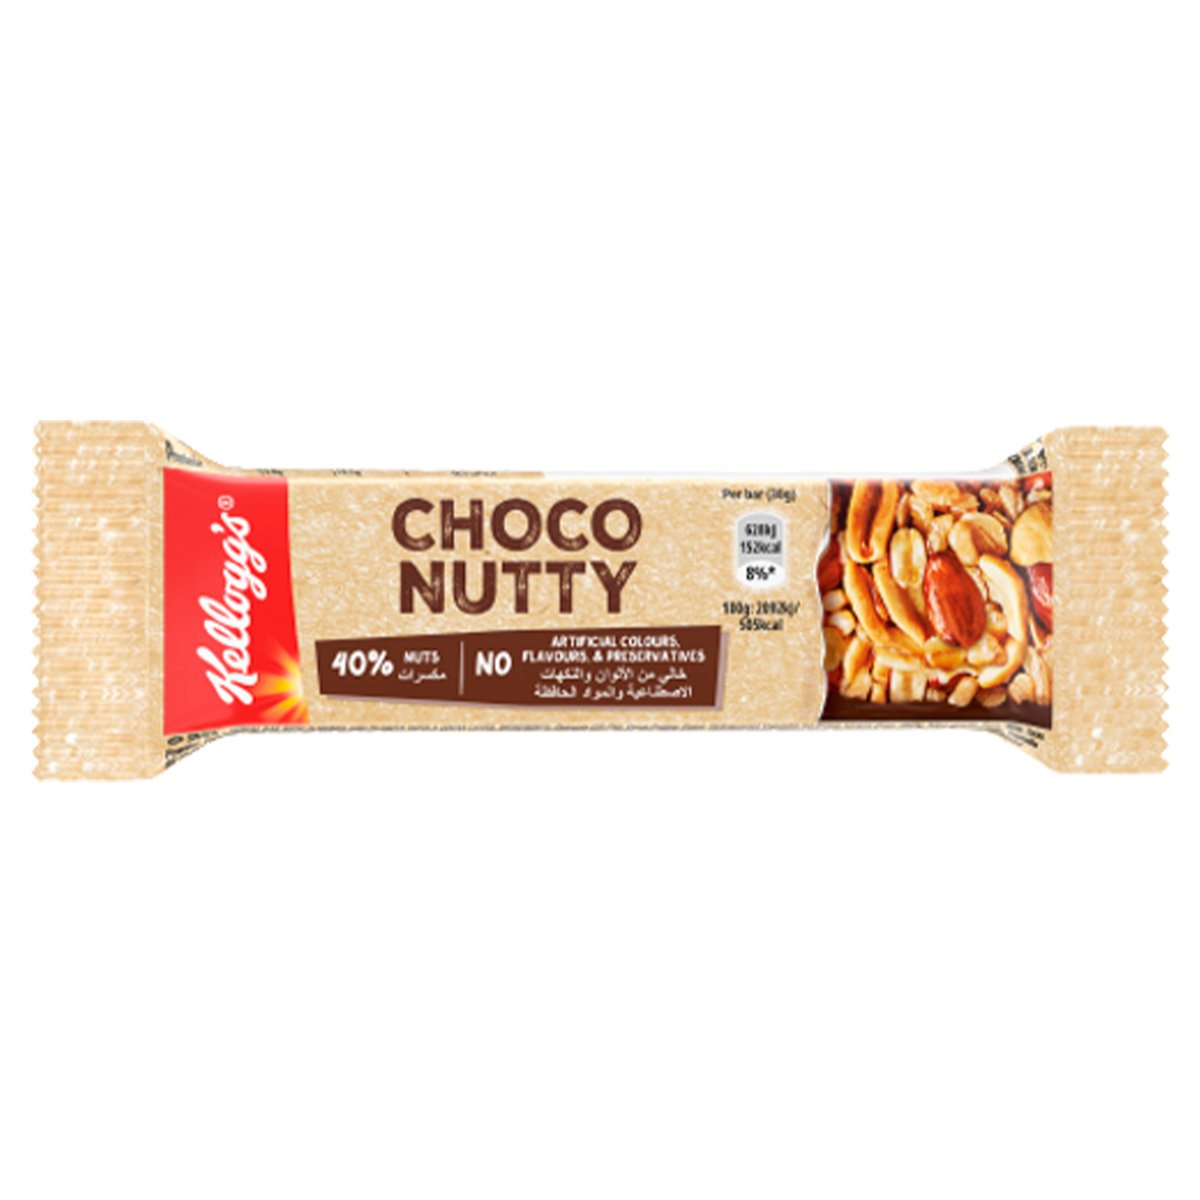 Kellogg's Choco Nutty Cereal Bar 30 g